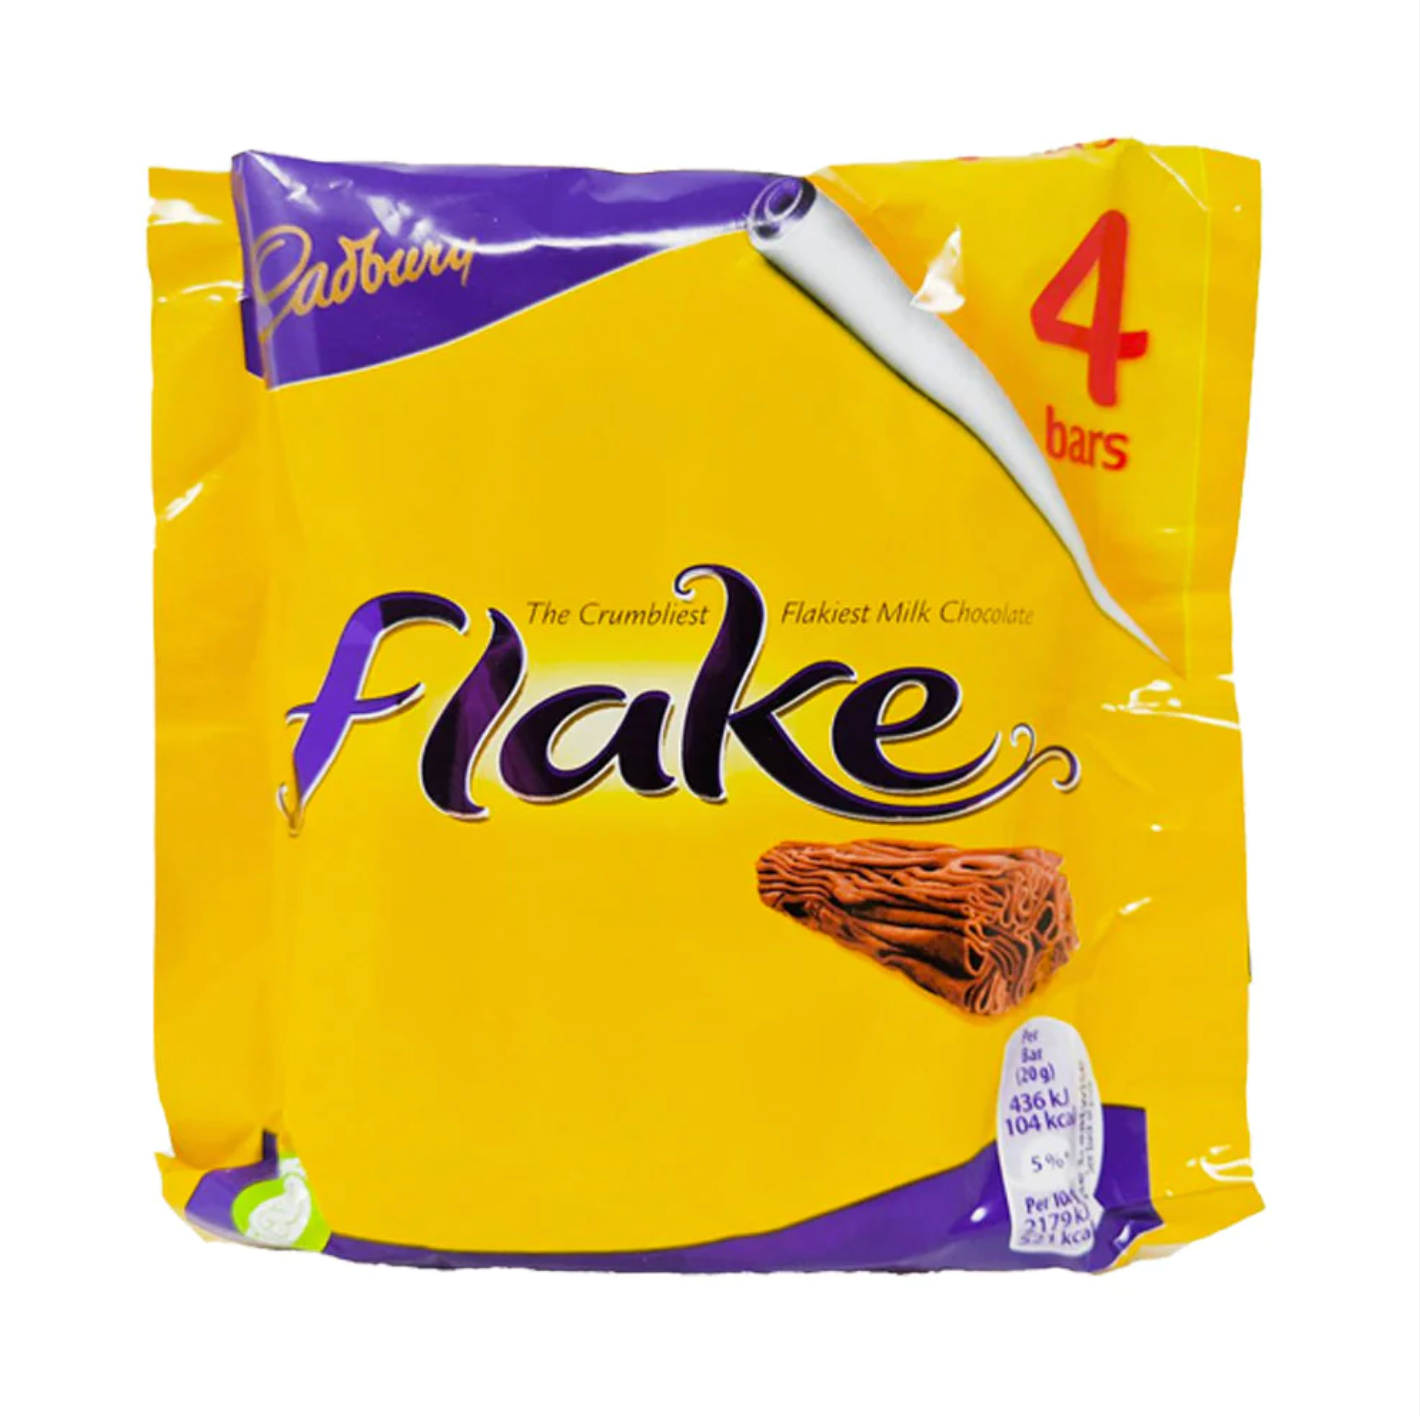 Cadburys Flake Chocolate Bar 4 Pack